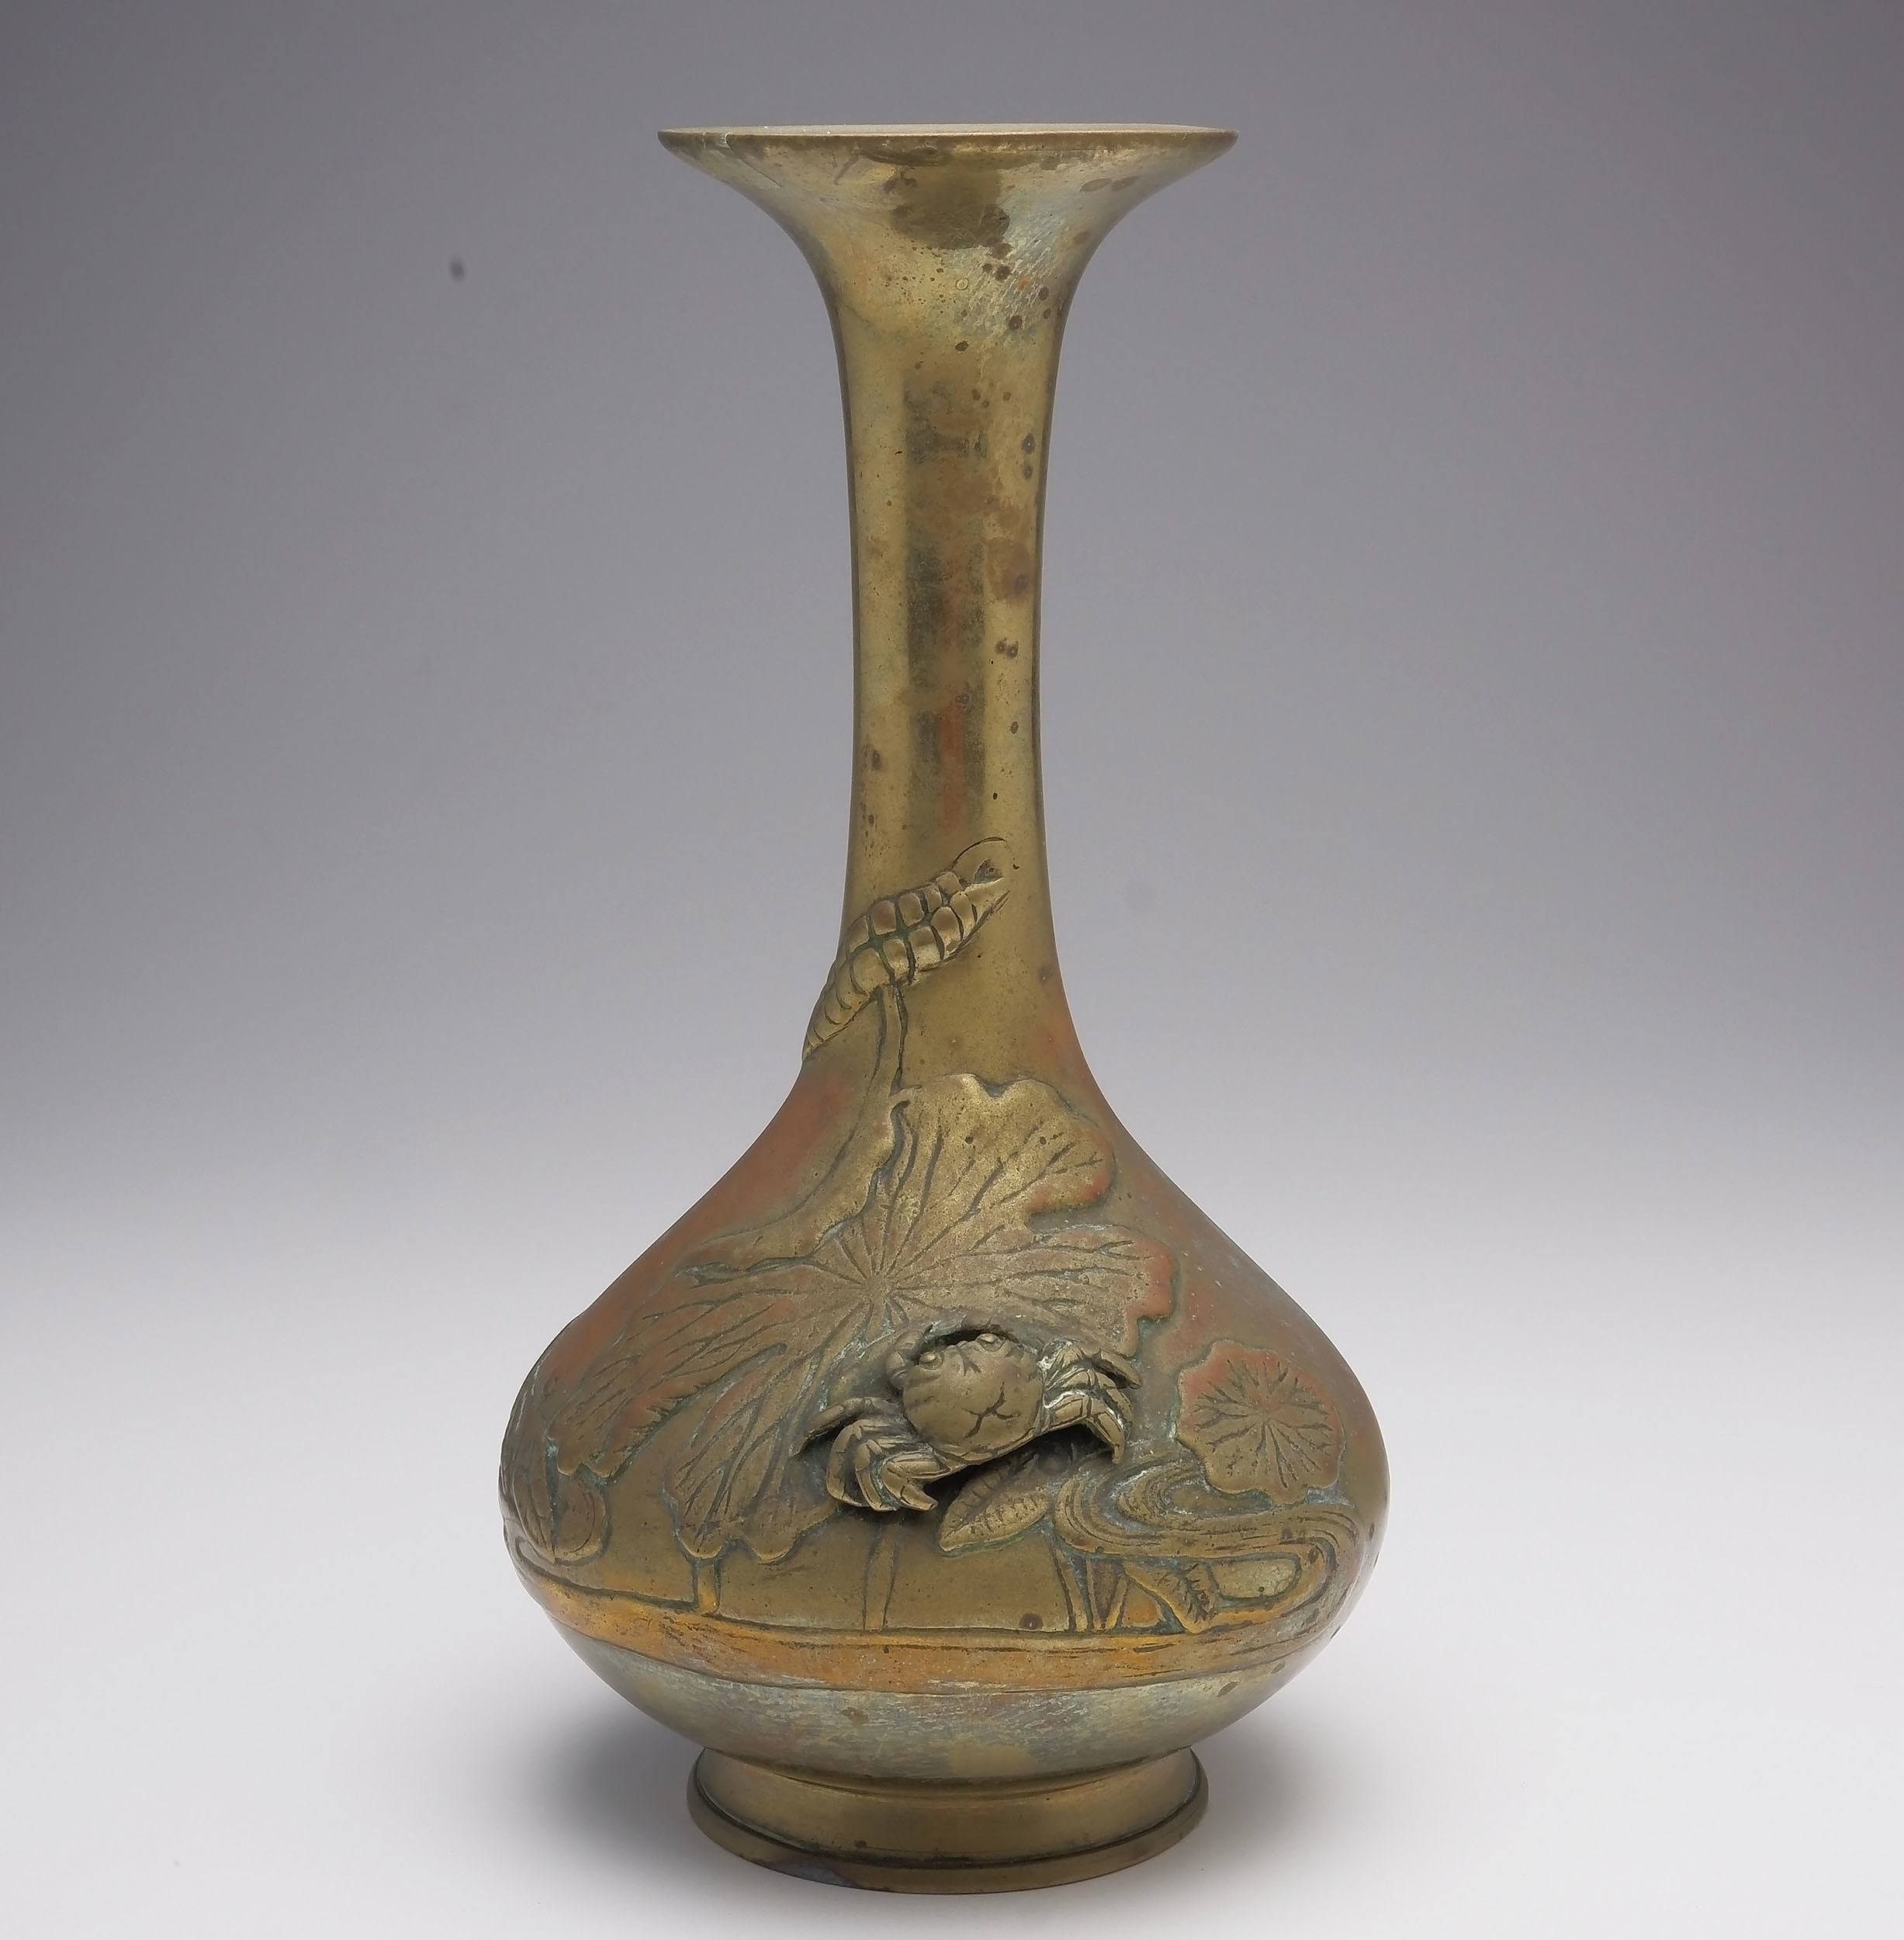 'Japanese Cast Brass Vase with Crab, Meiji Period 1868-1912'